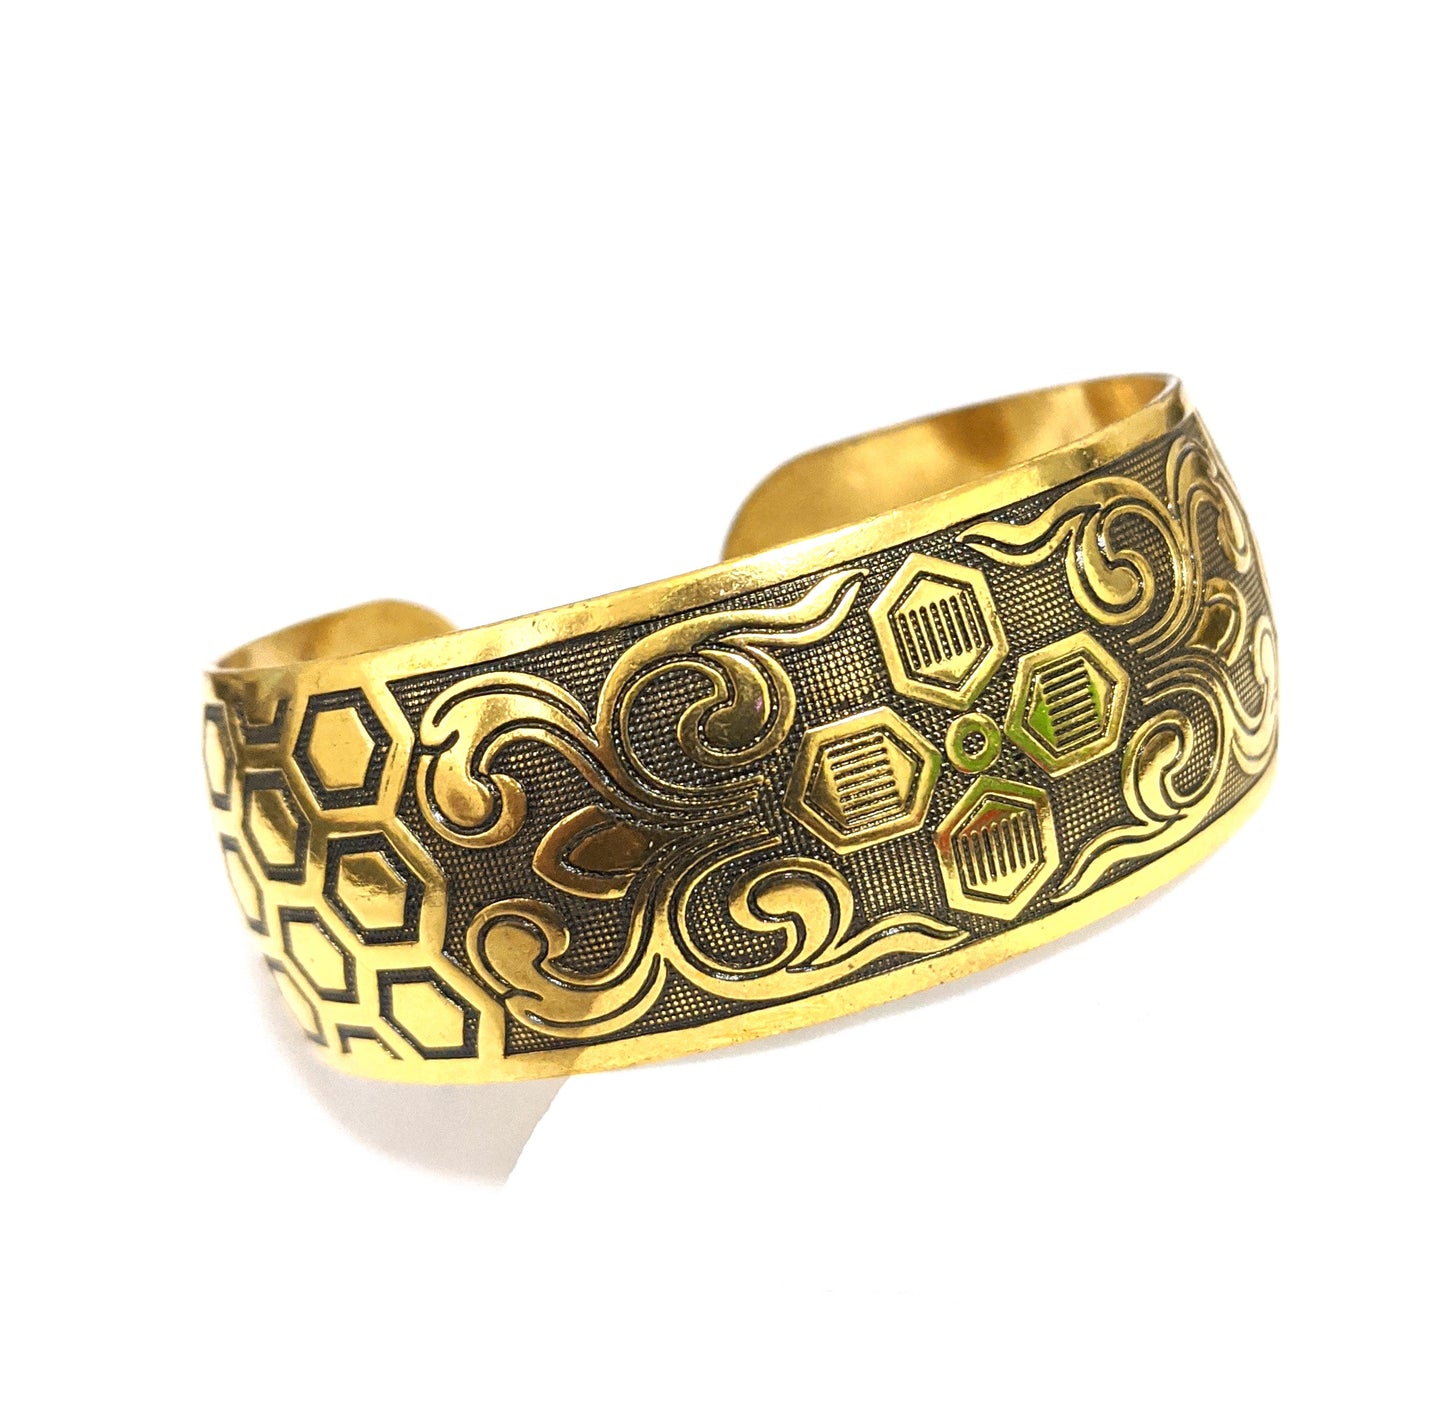 Antique gold finish oxidized broad kada - Design 2 - Simpliful